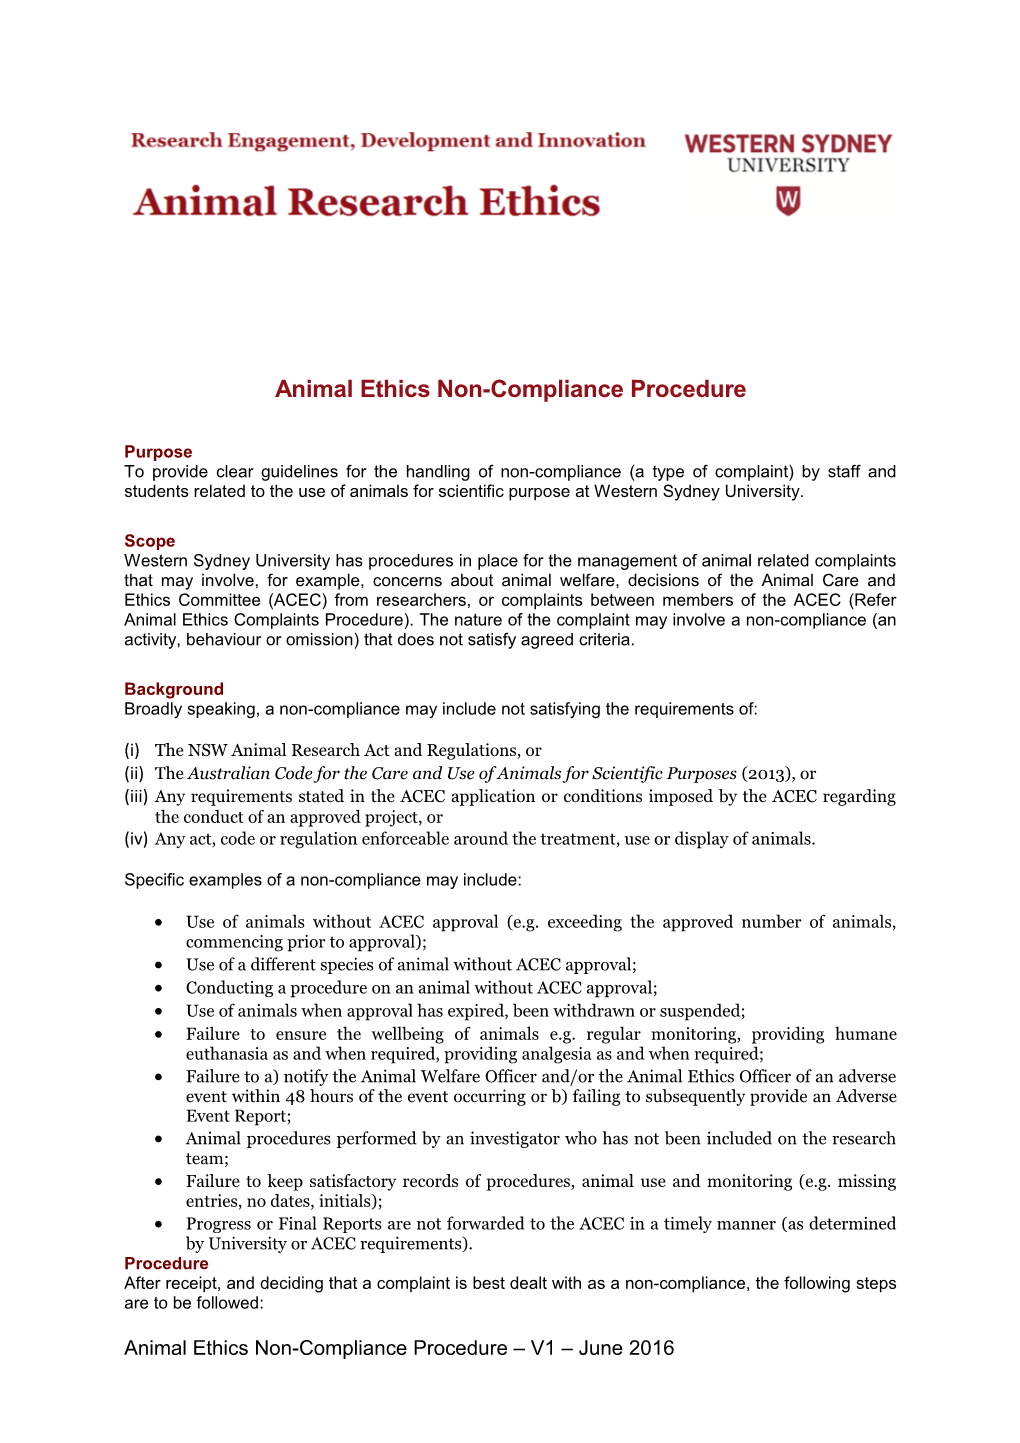 Animal Ethics Non-Compliance Procedure